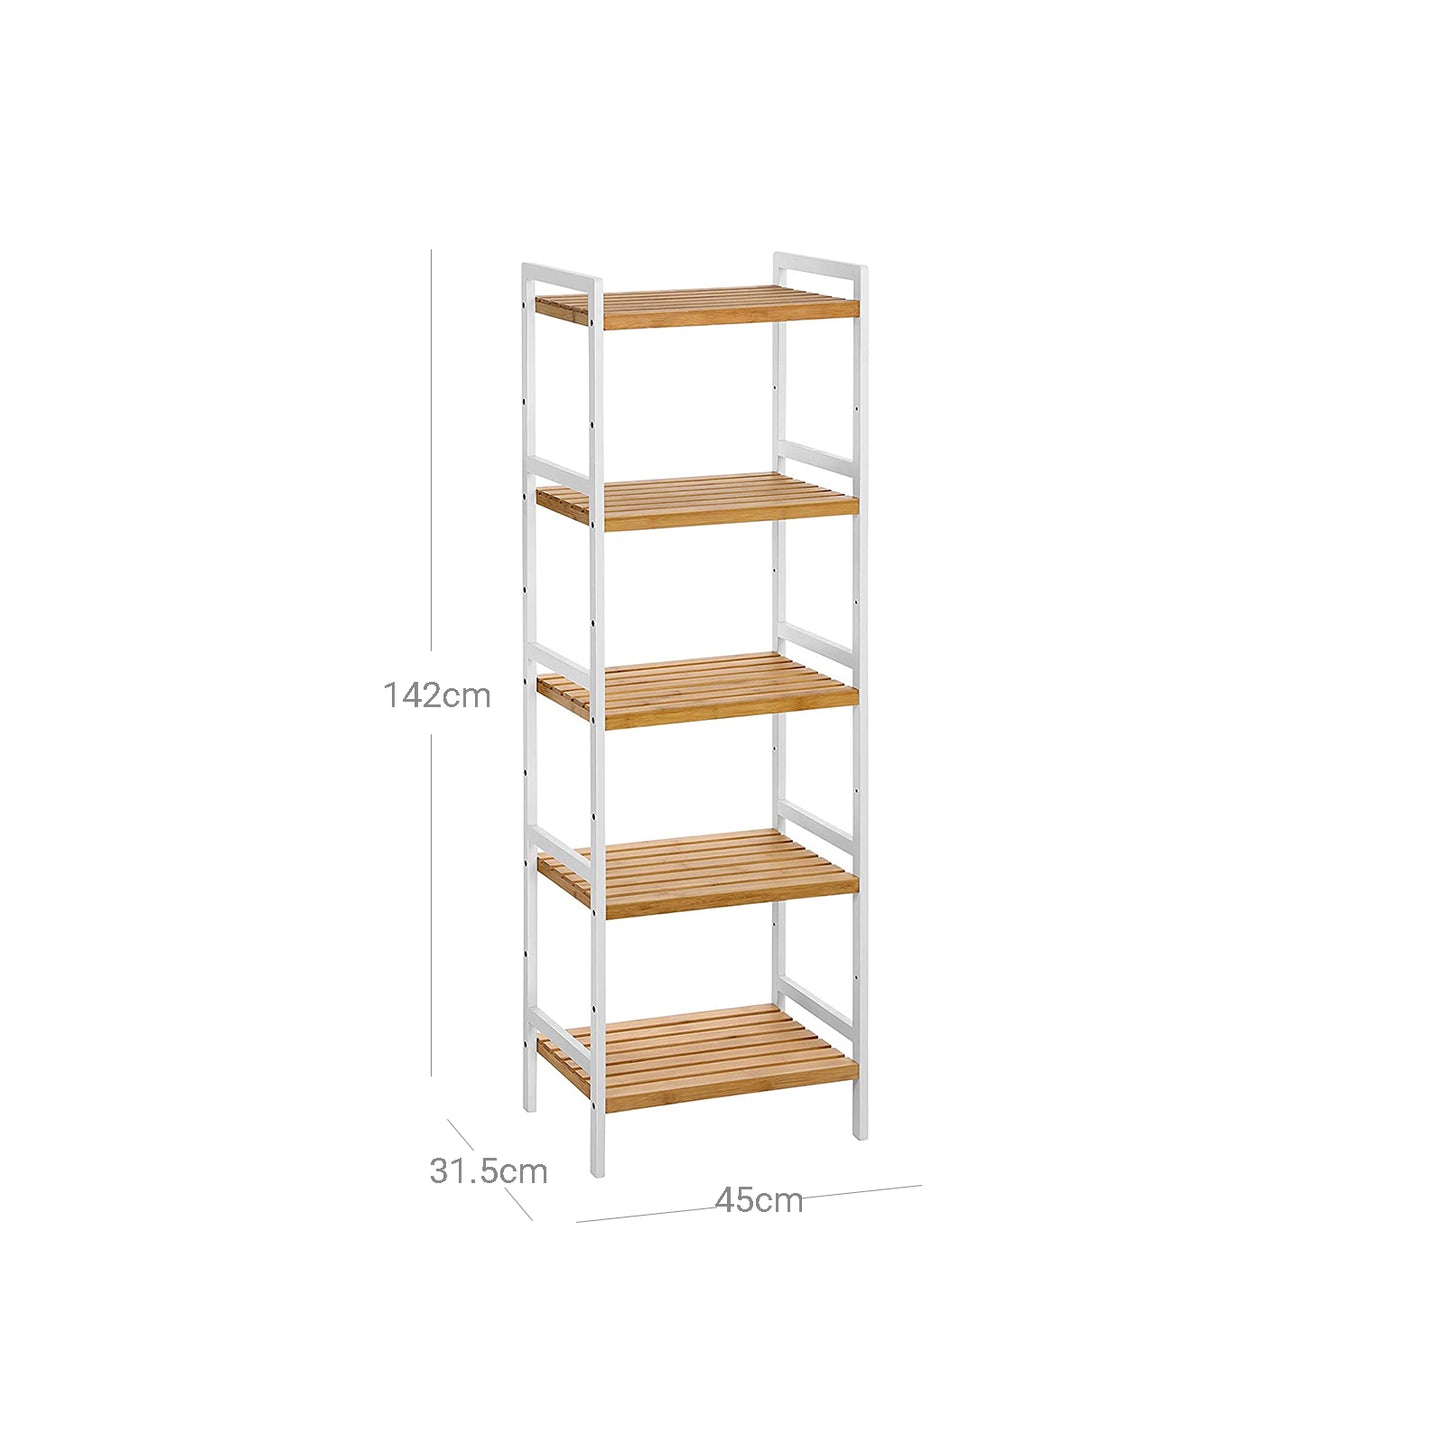 5 tier storage rack